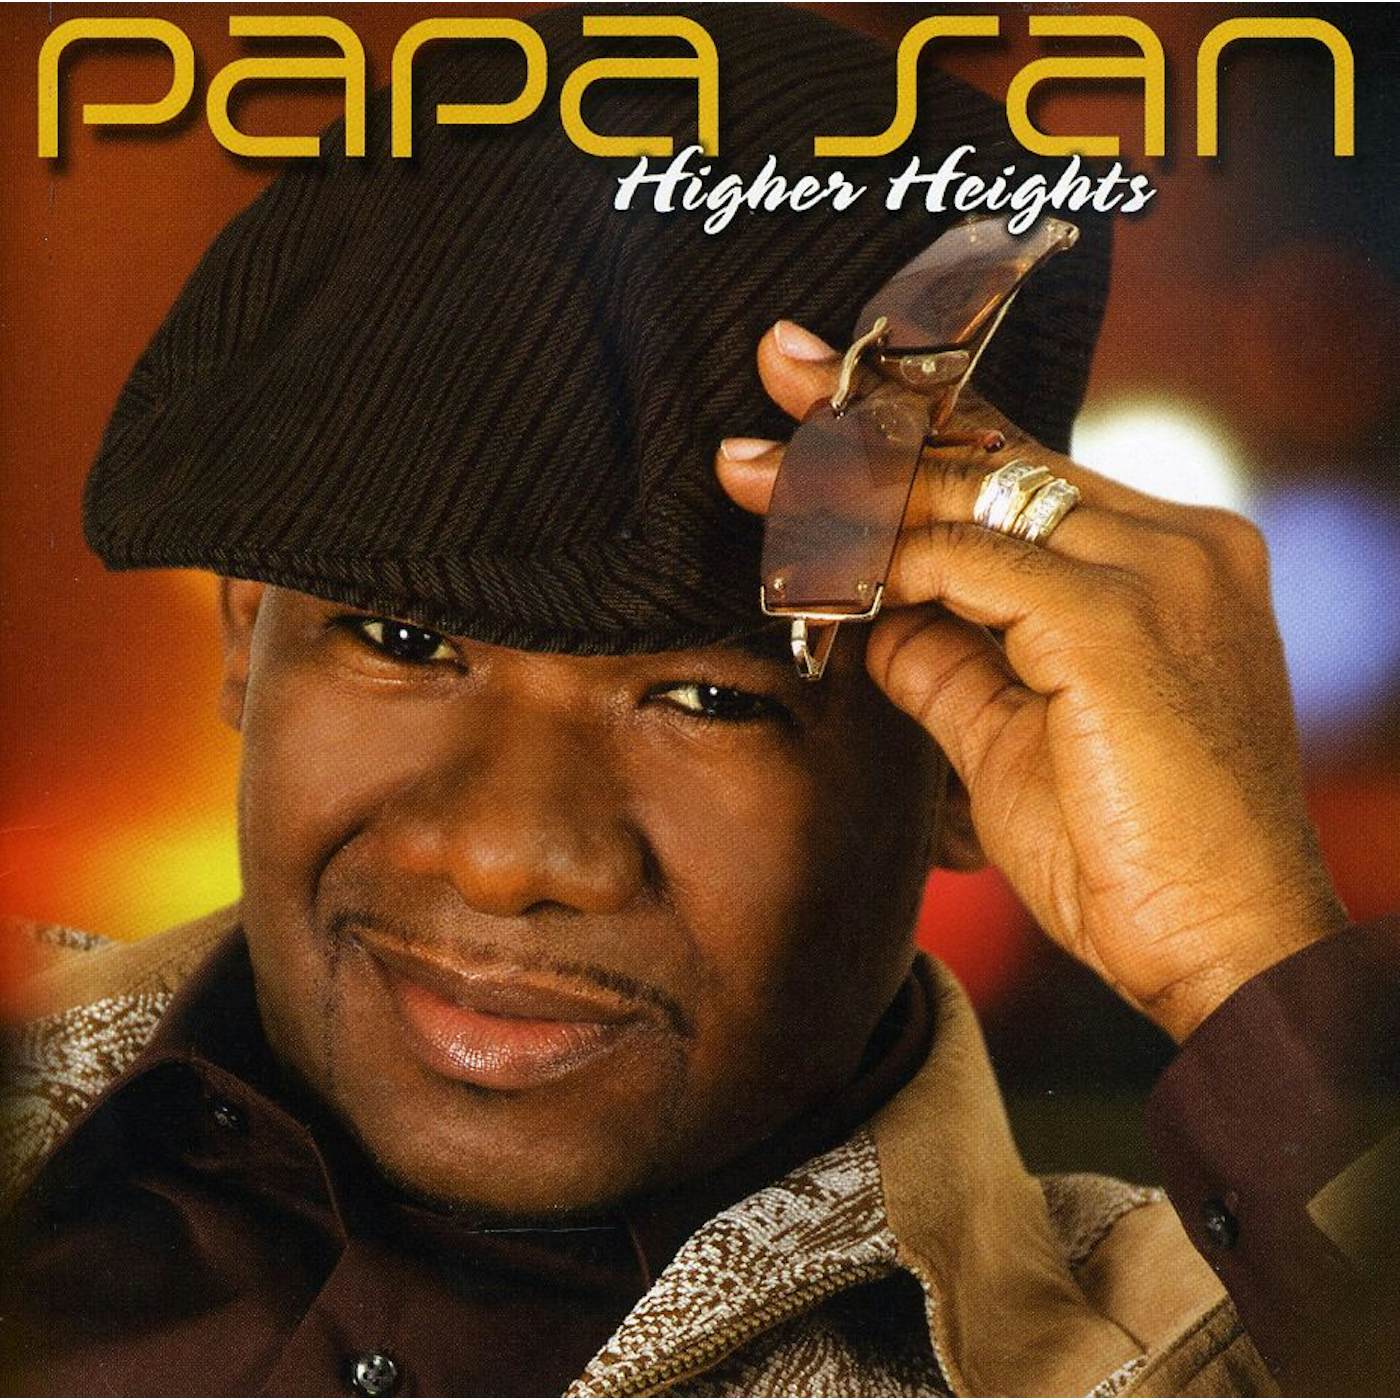 Papa San HIGHER HEIGHTS CD